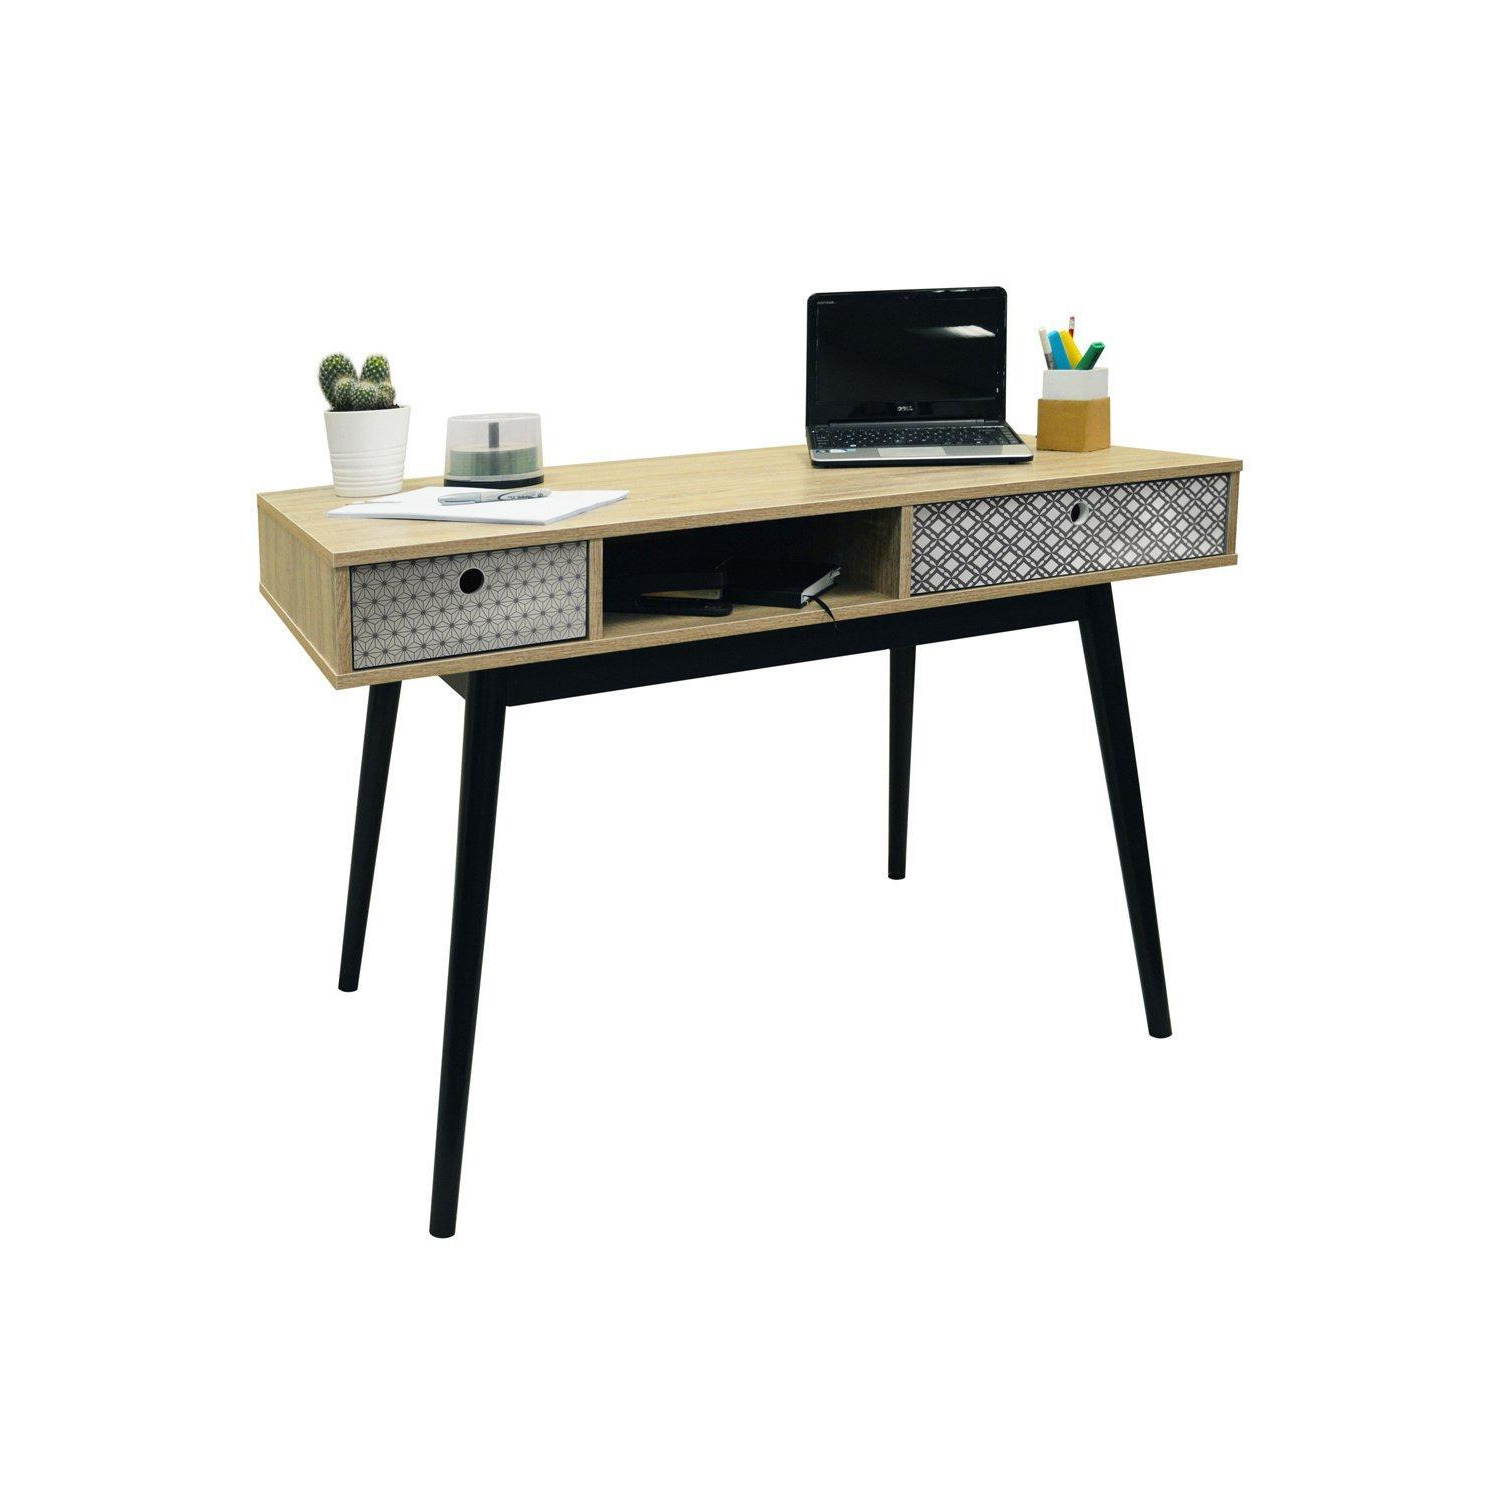 'Retro' - 2 Drawer Office Computer Desk  Dressing Table - Oak  Black - image 1